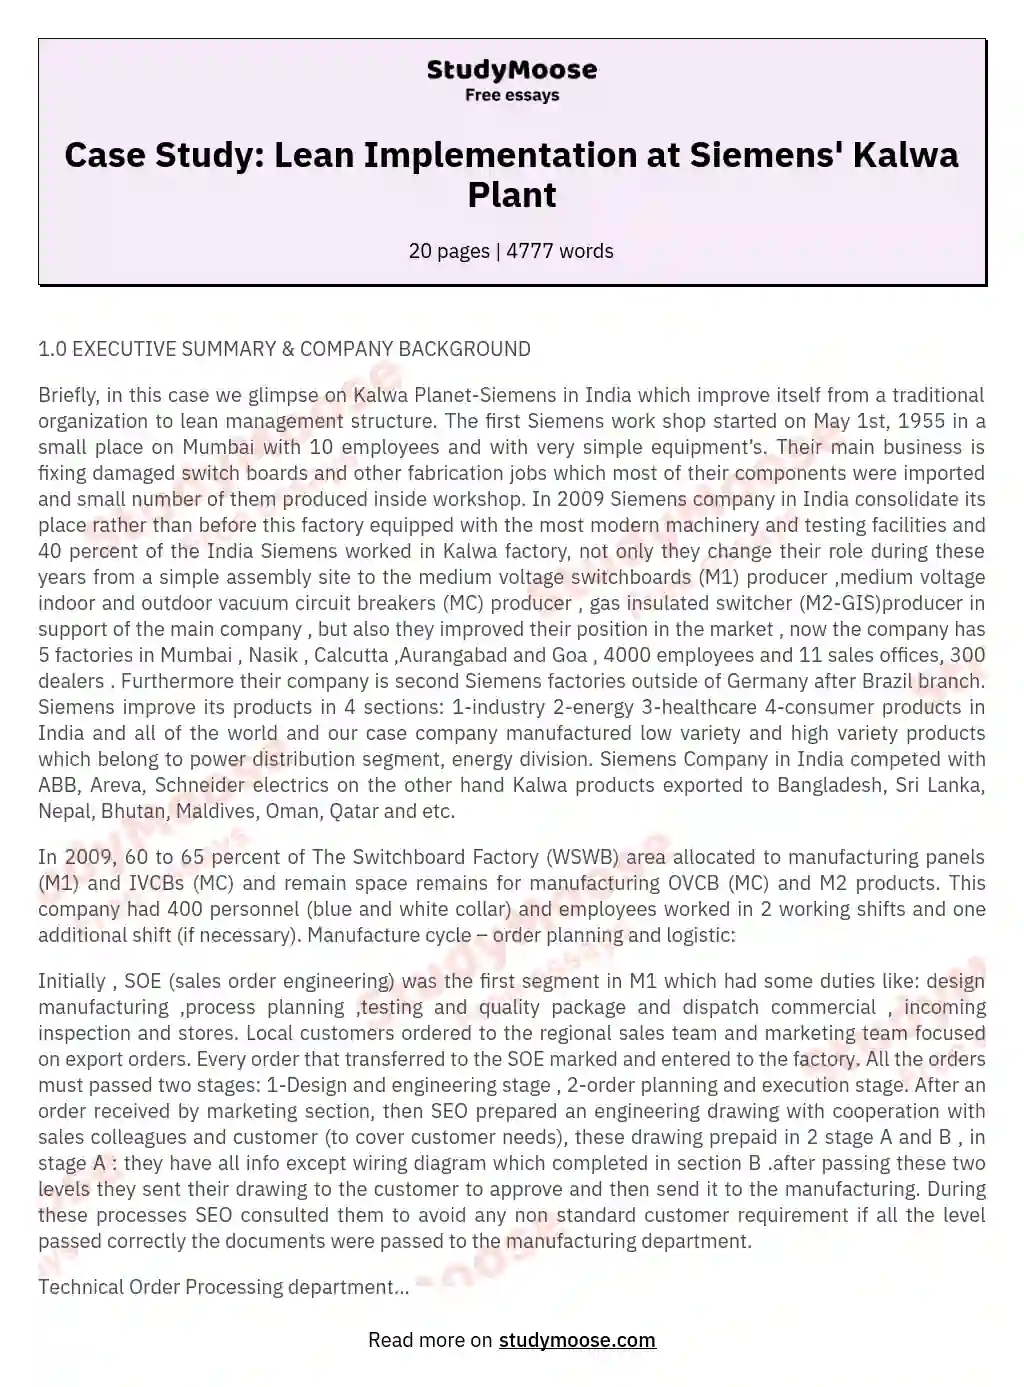 Case Study: Lean Implementation at Siemens' Kalwa Plant essay